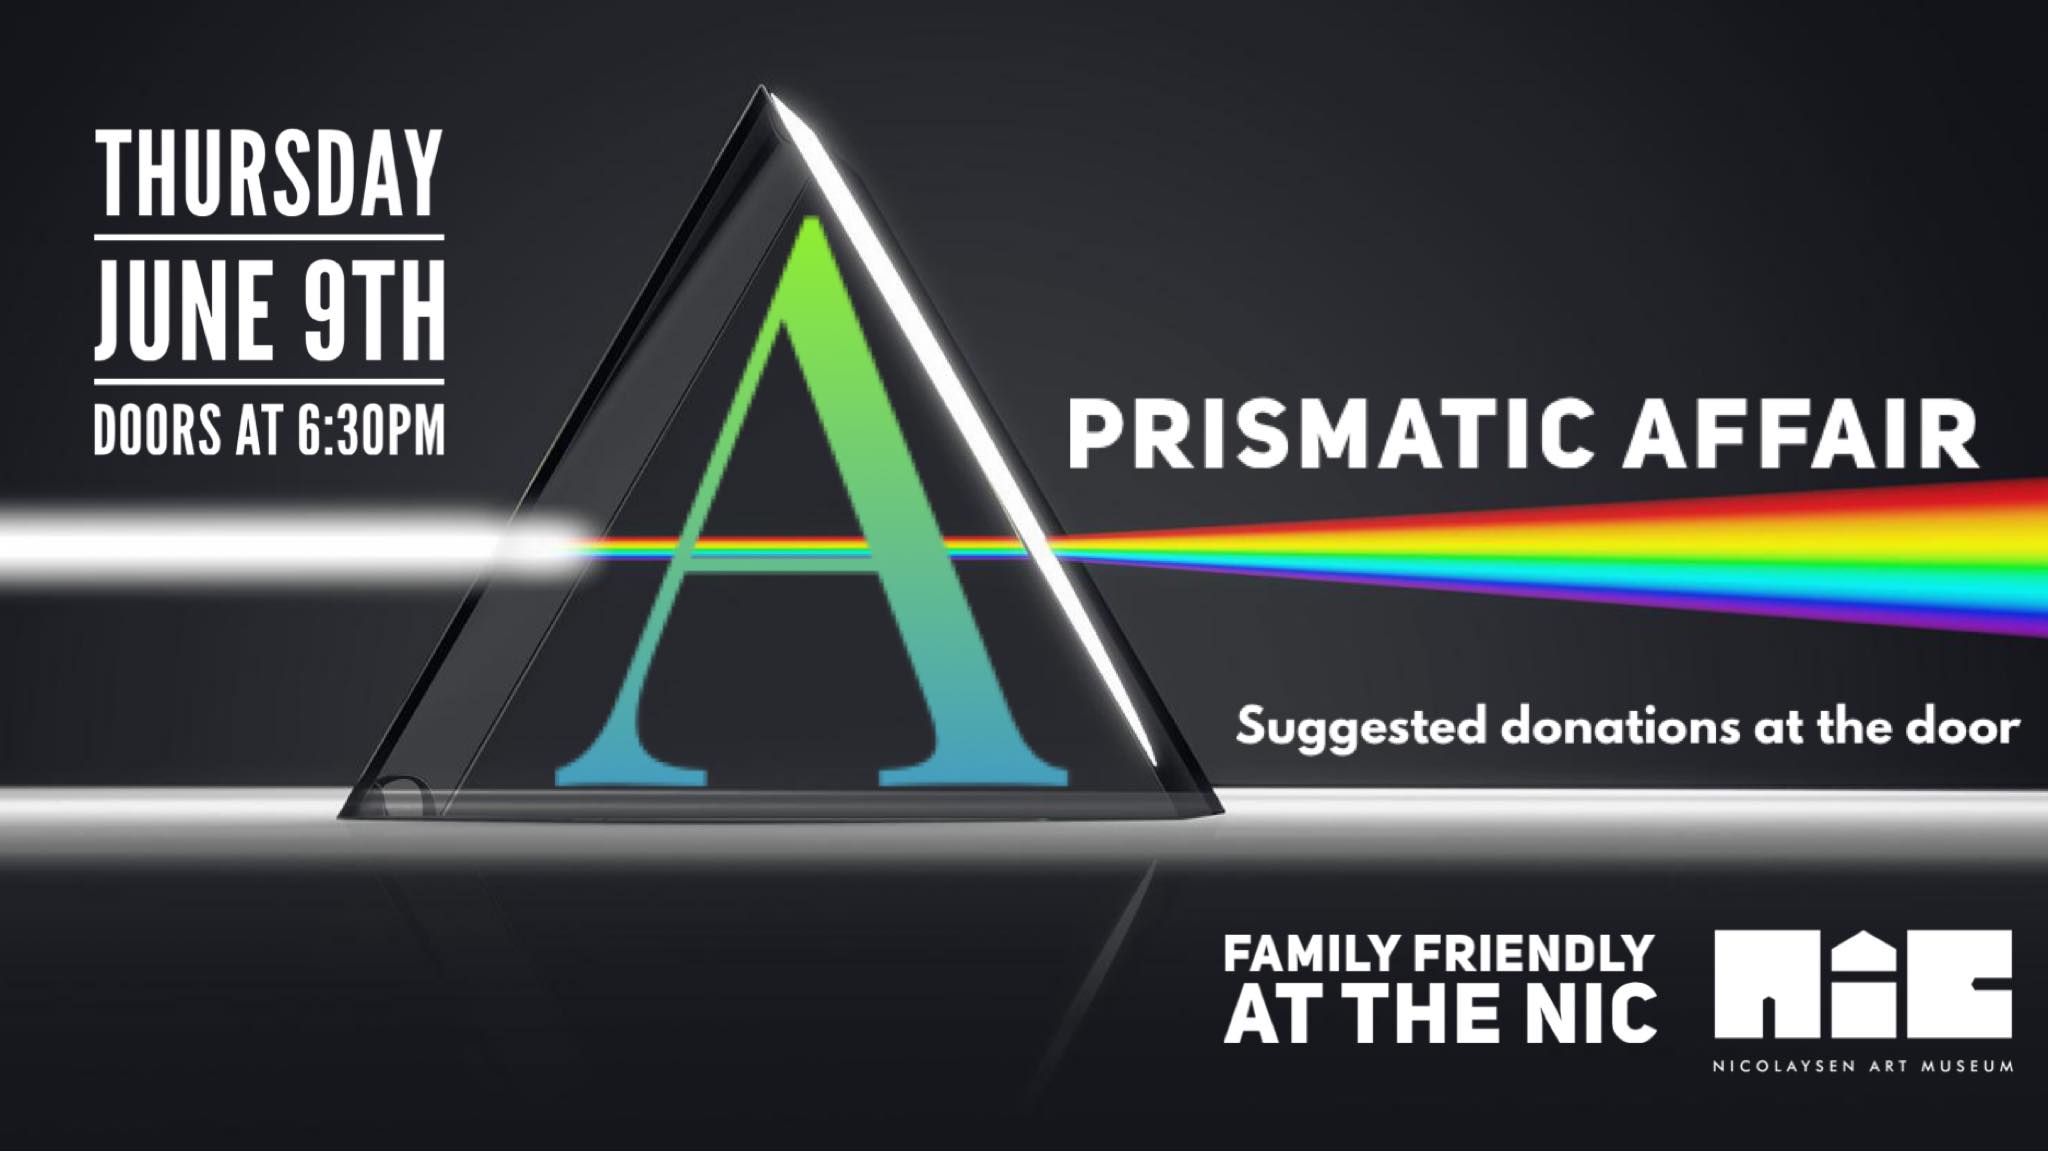 prismatic affair event poster